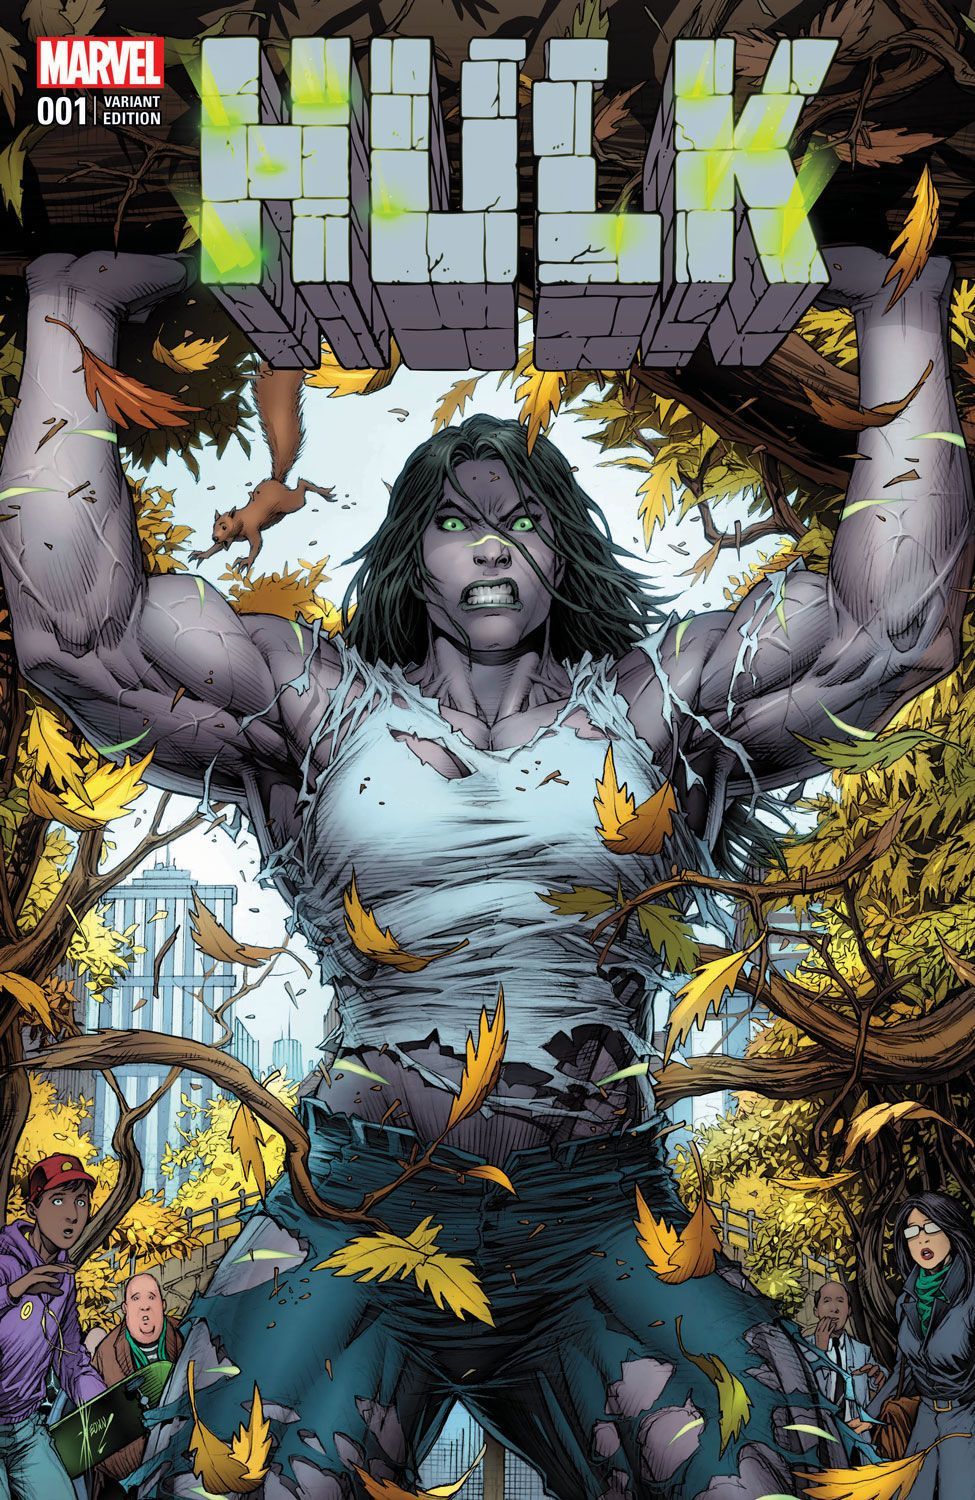 COMICS: Jennifer Walters Takes Up The Mantle Of HULK In This First Look At Marvel's New Ongoing Series. Hulk comic, Hulk art, Shehulk